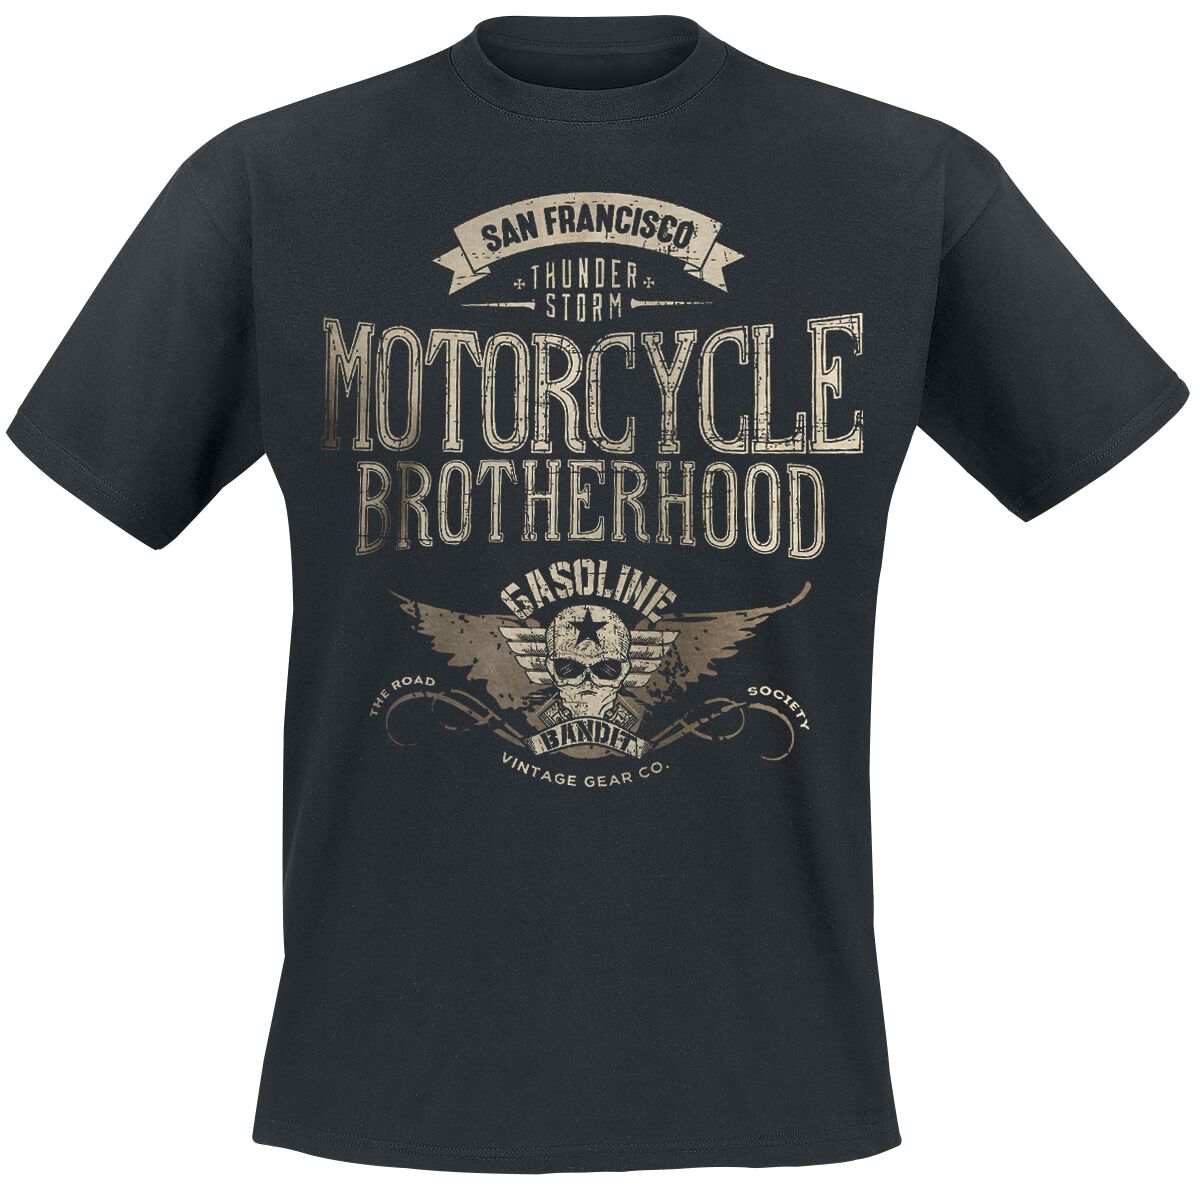 Gasoline Bandit Motorcycle Brotherhood T-Shirt black